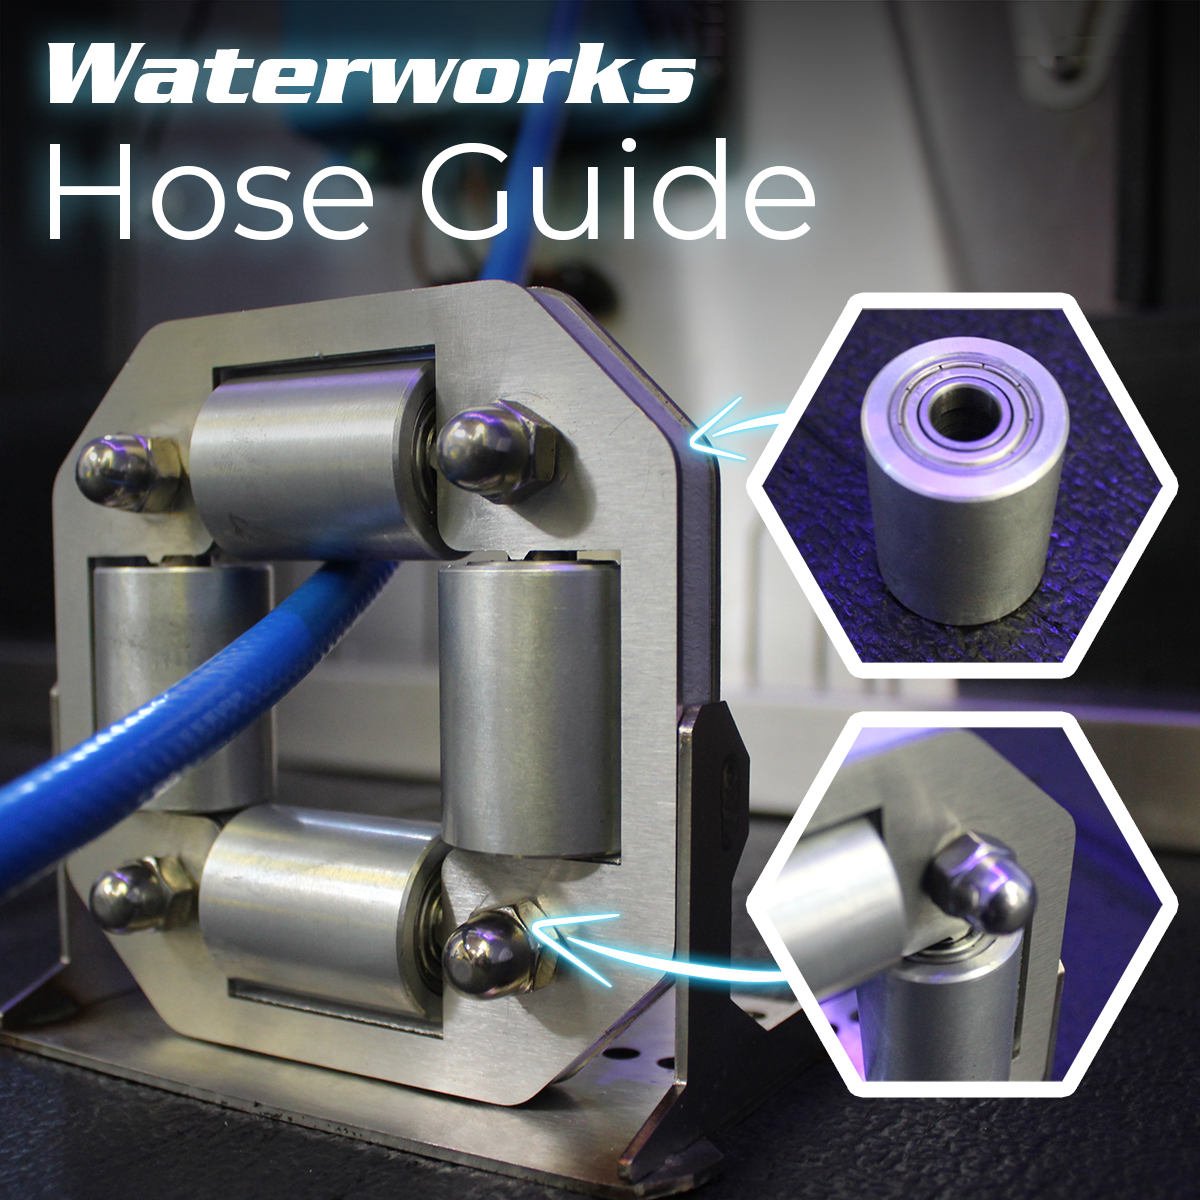 Waterworks Hose Guide